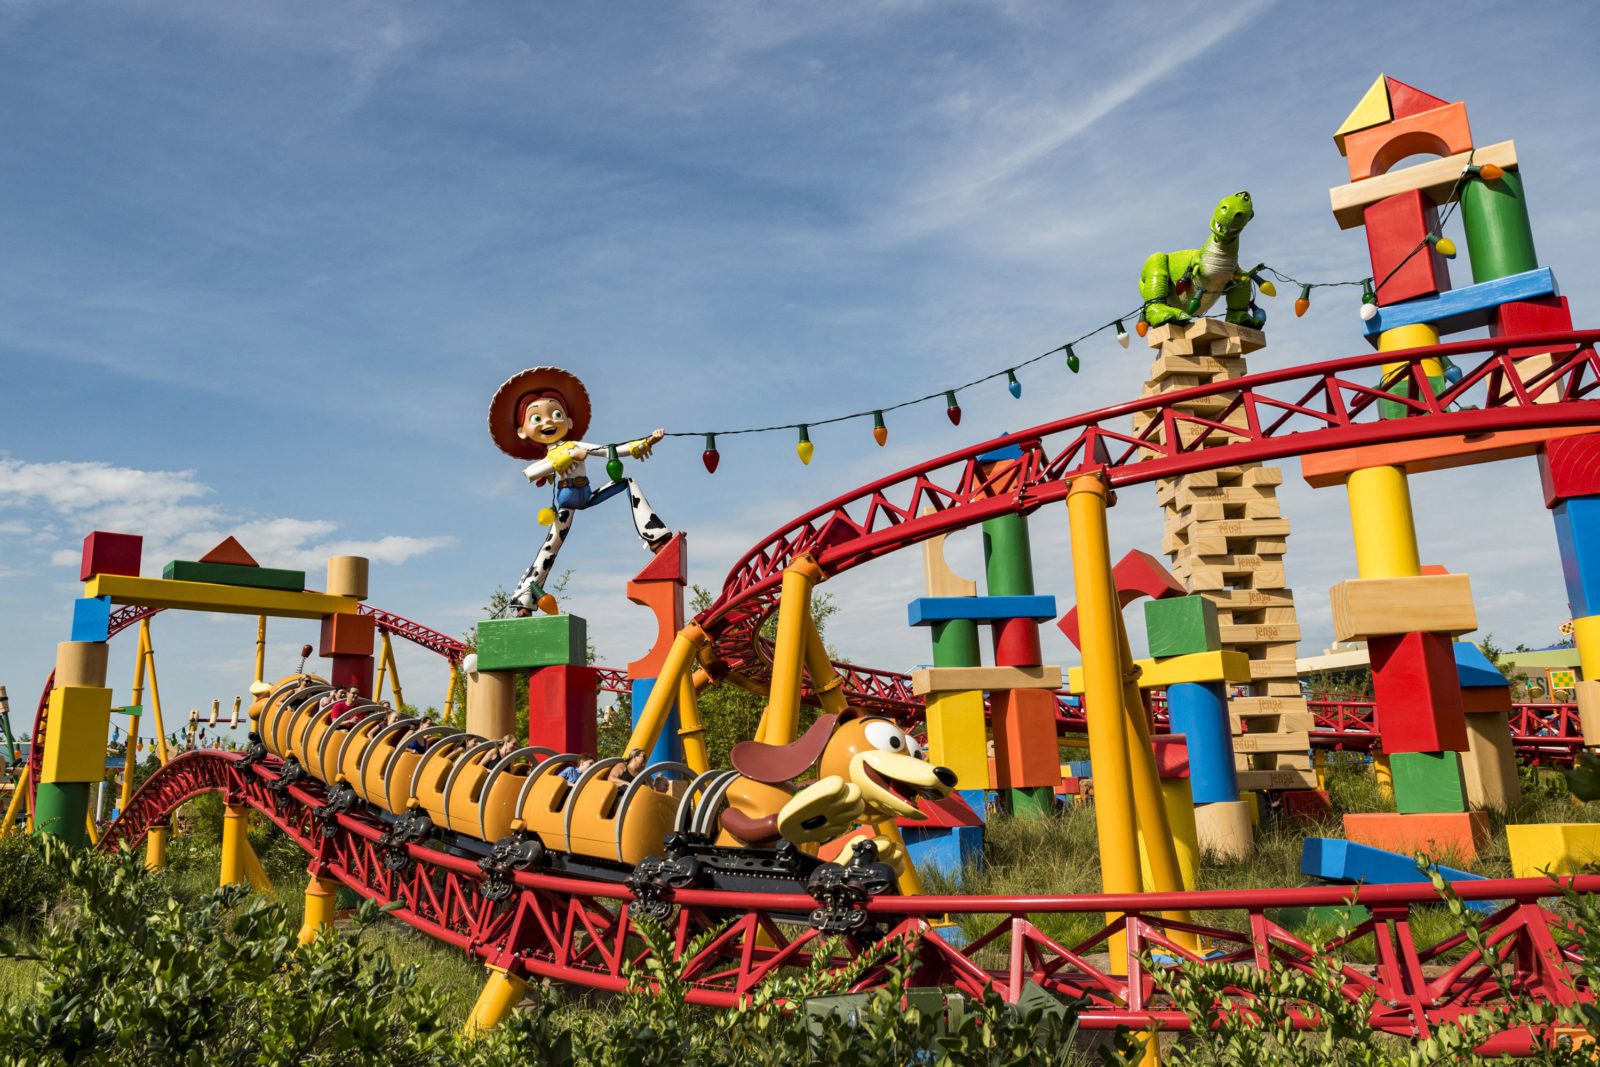 Slinky Dog Dash at Disney’s Hollywood Studios (Photo: Disney)